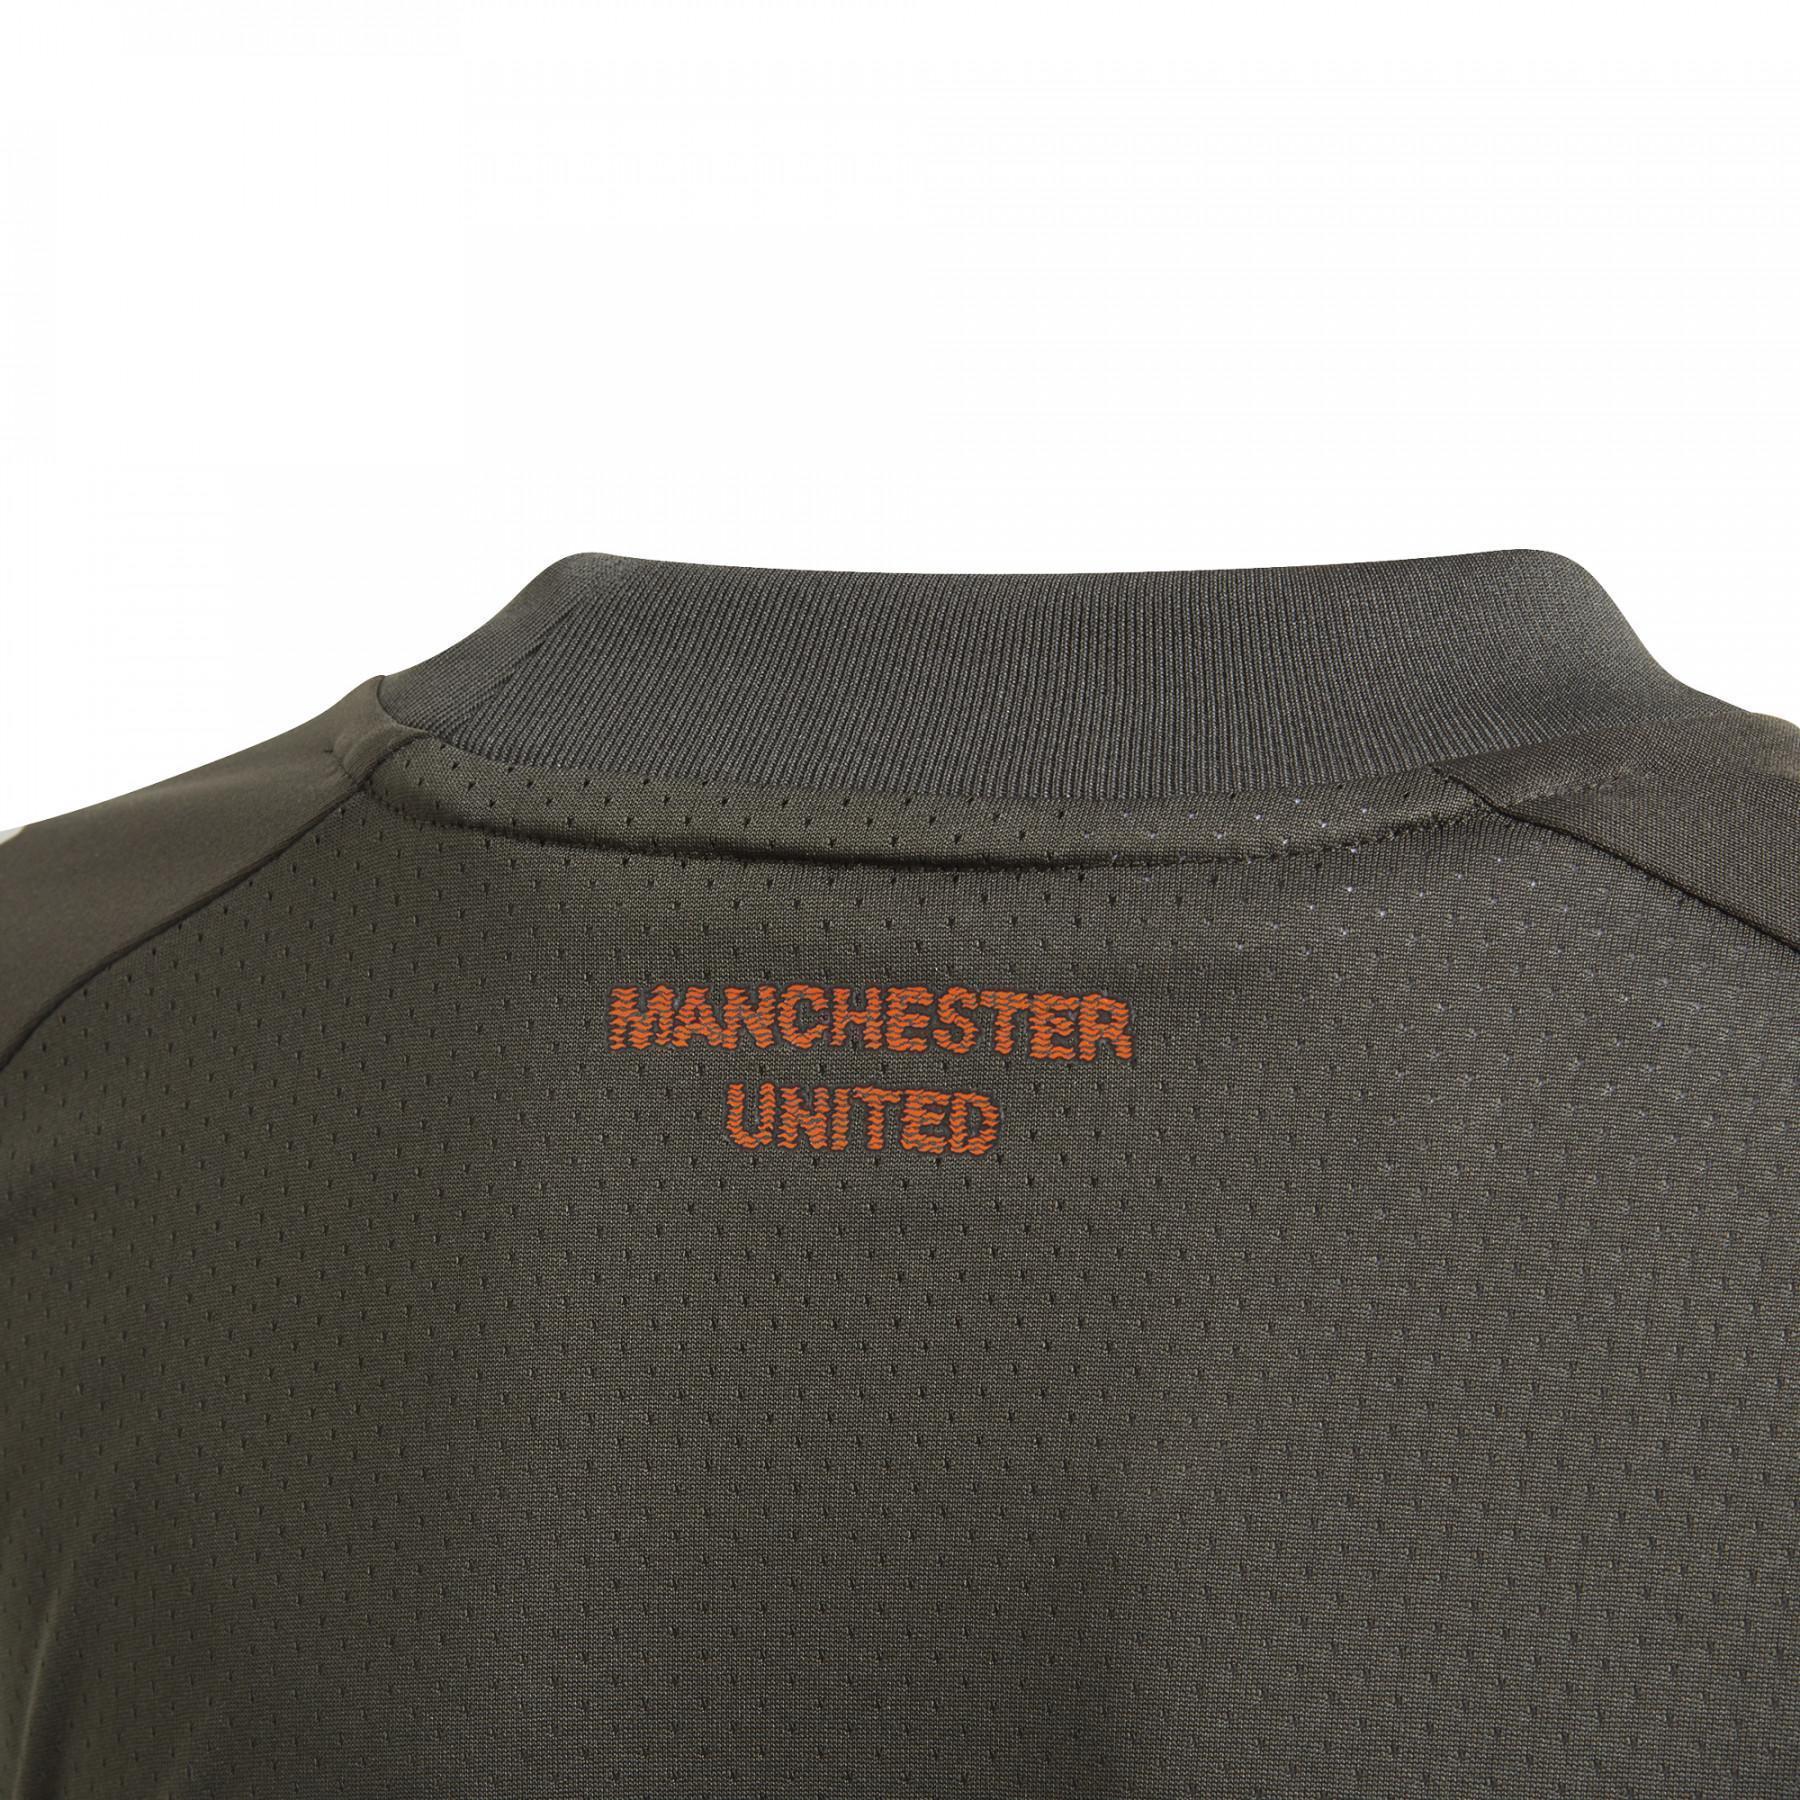 Camisola para crianças Manchester United d’entraînement 2020/21